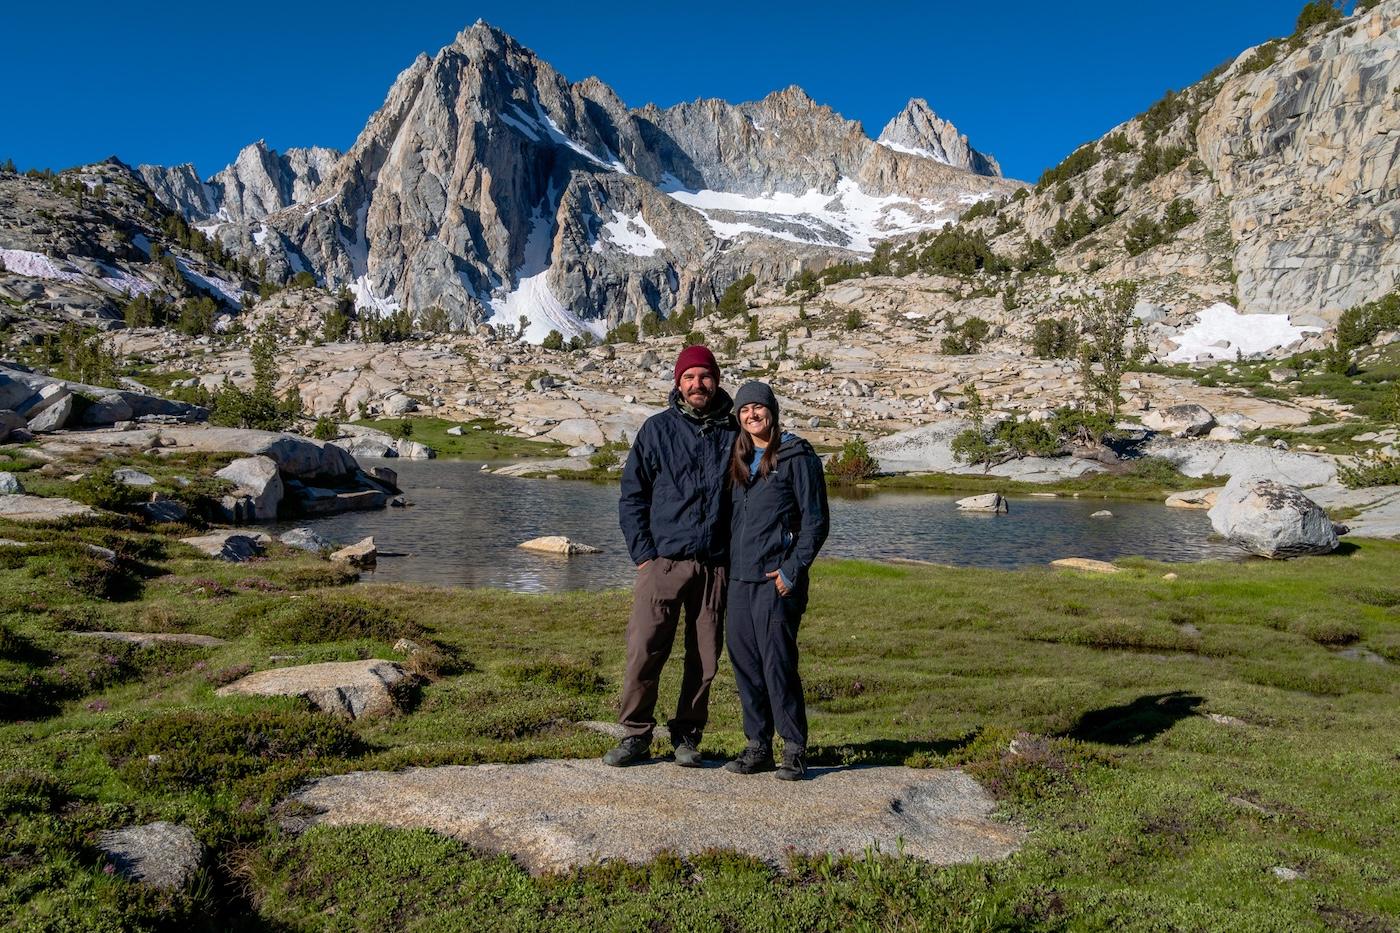 Brock Dallman and Sam Stych in The Sabrina Basin of the Eastern Sierra